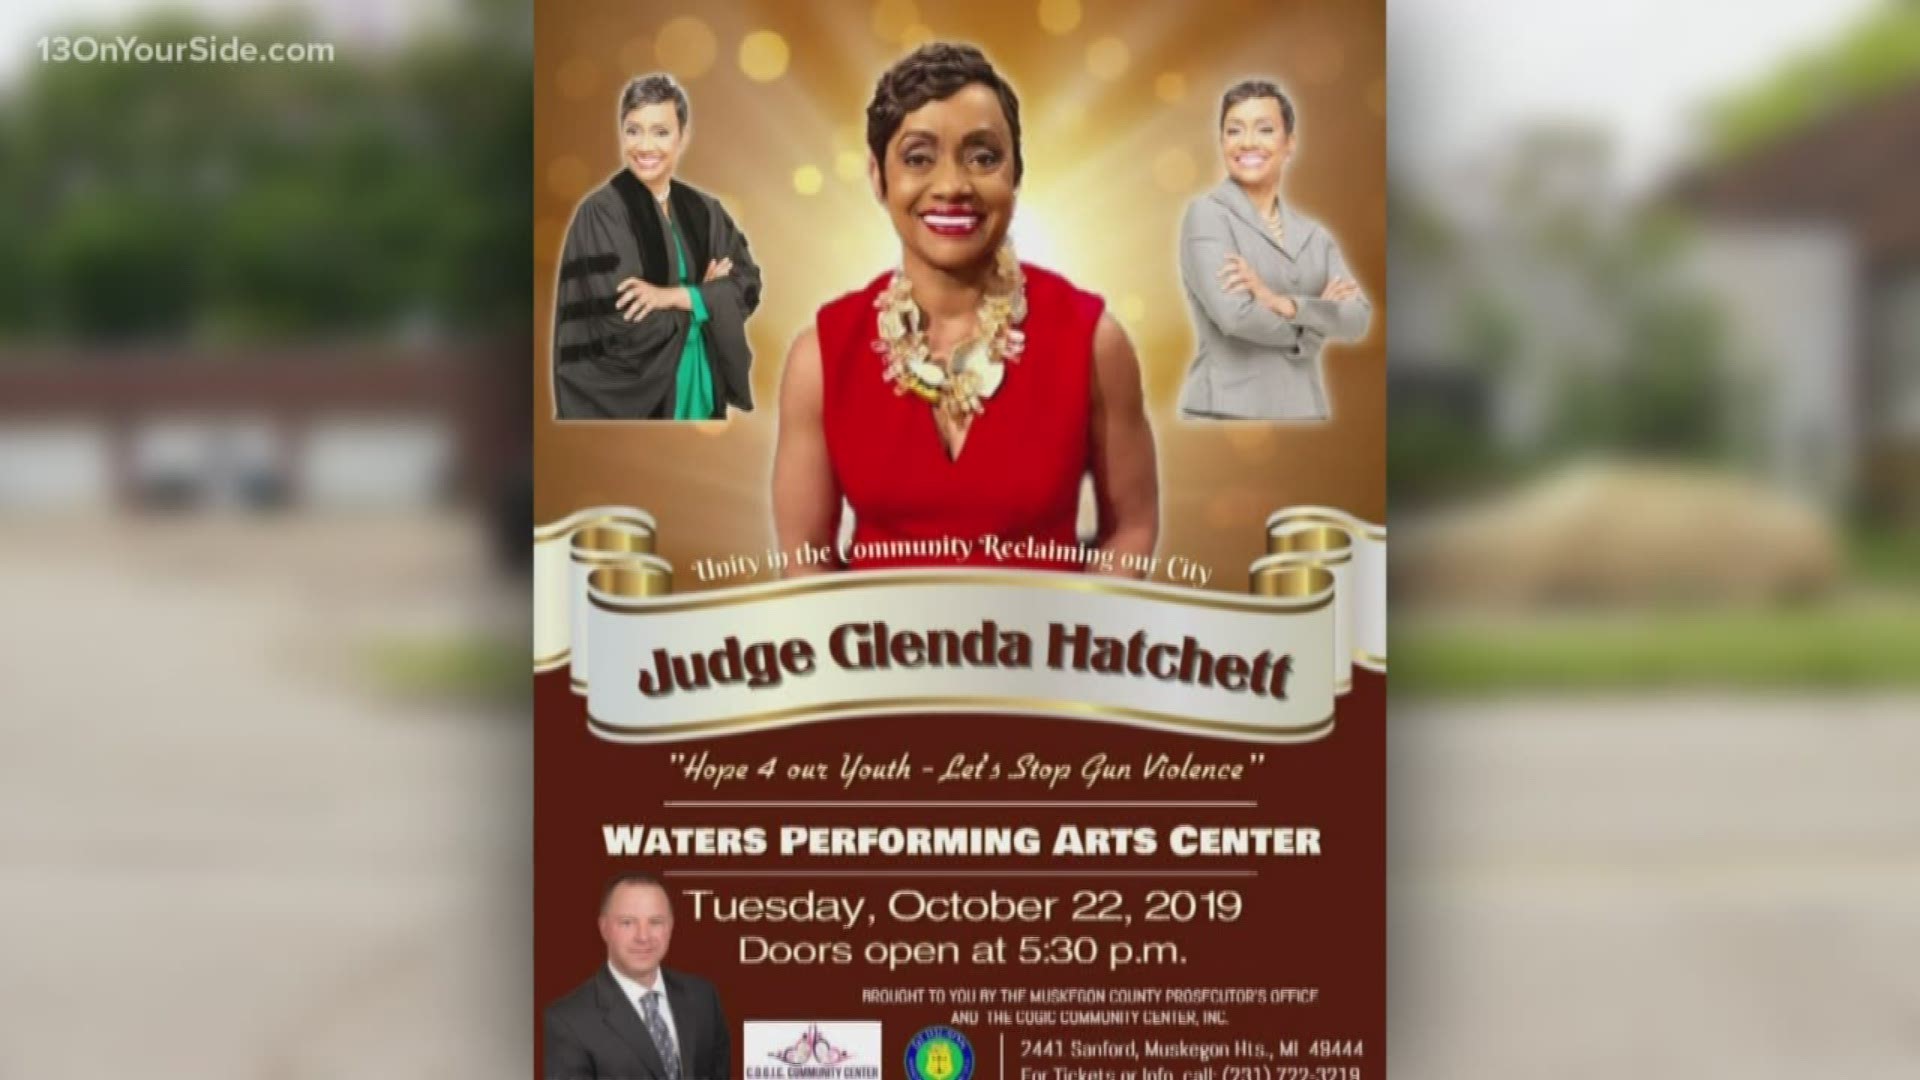 Television's Judge Glenda Hatchett will be the keynote speaker at a gun violence event in Muskegon Heights.